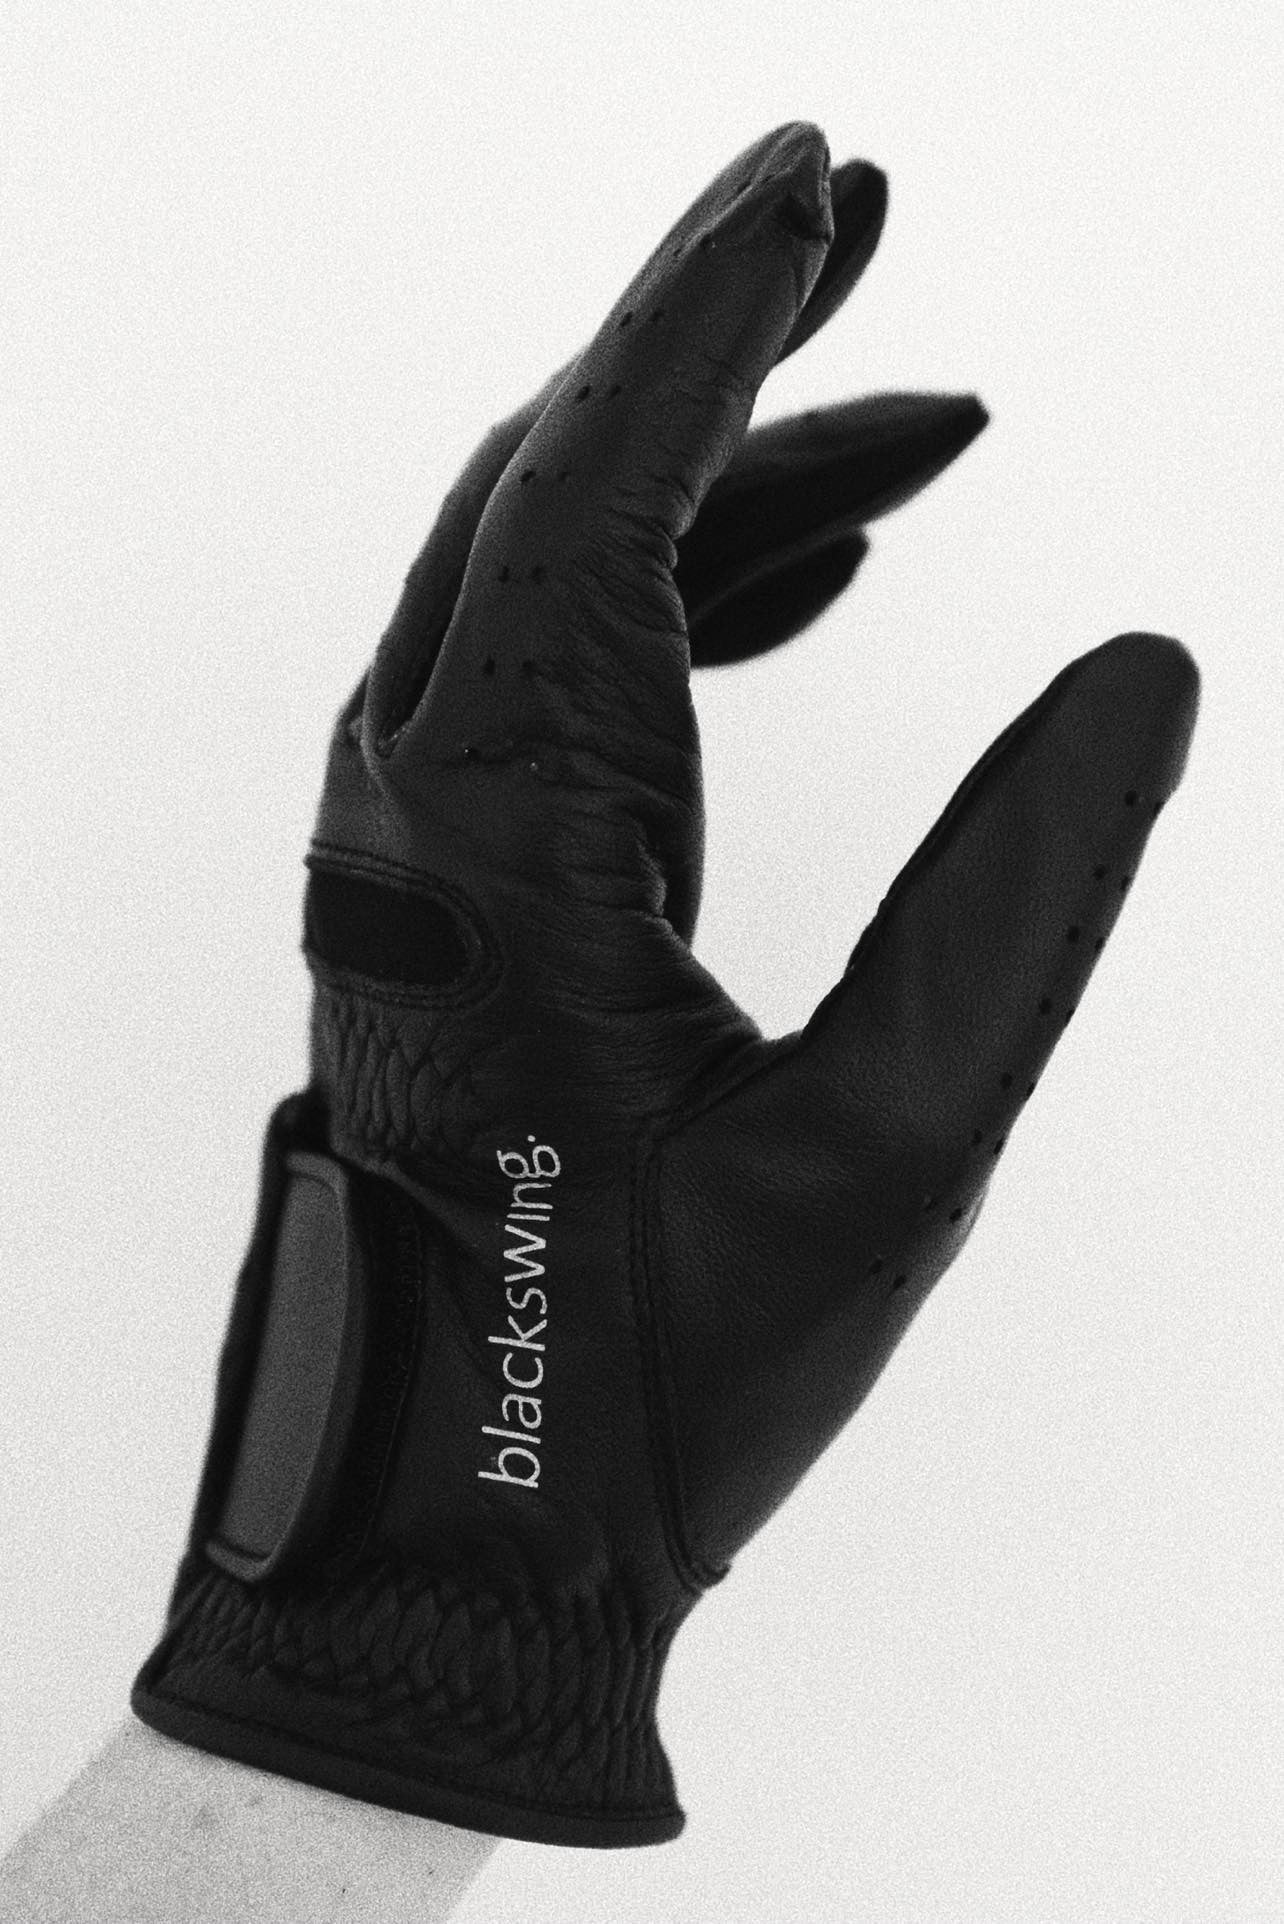 Blackswing Golf glove - golf handske i sver cabretta skinn